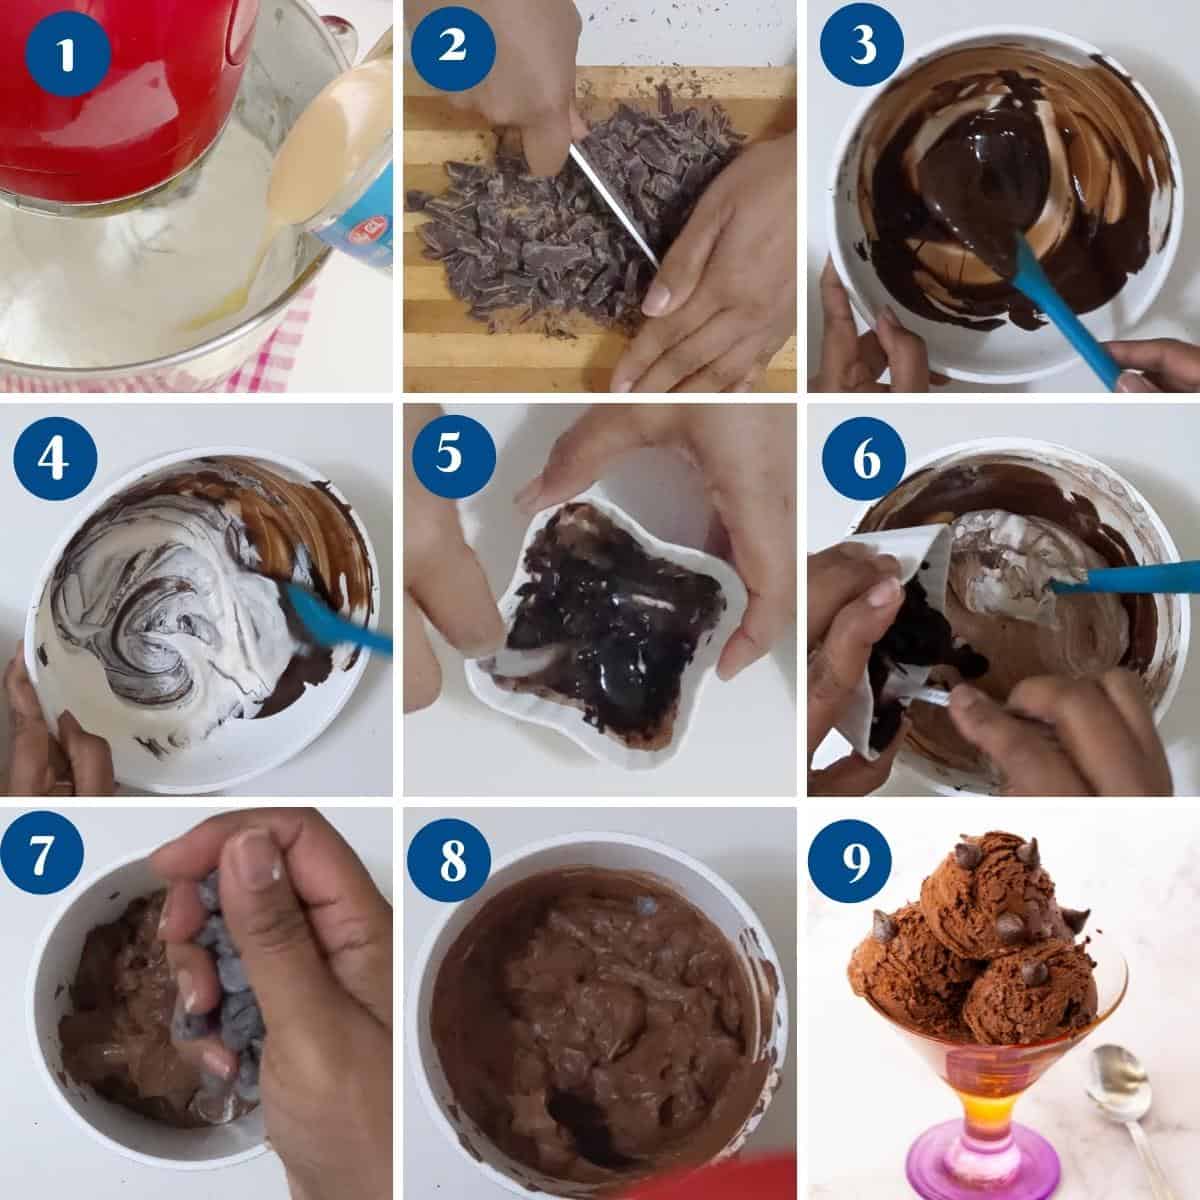 Progress pictures making chocolate ice cream.